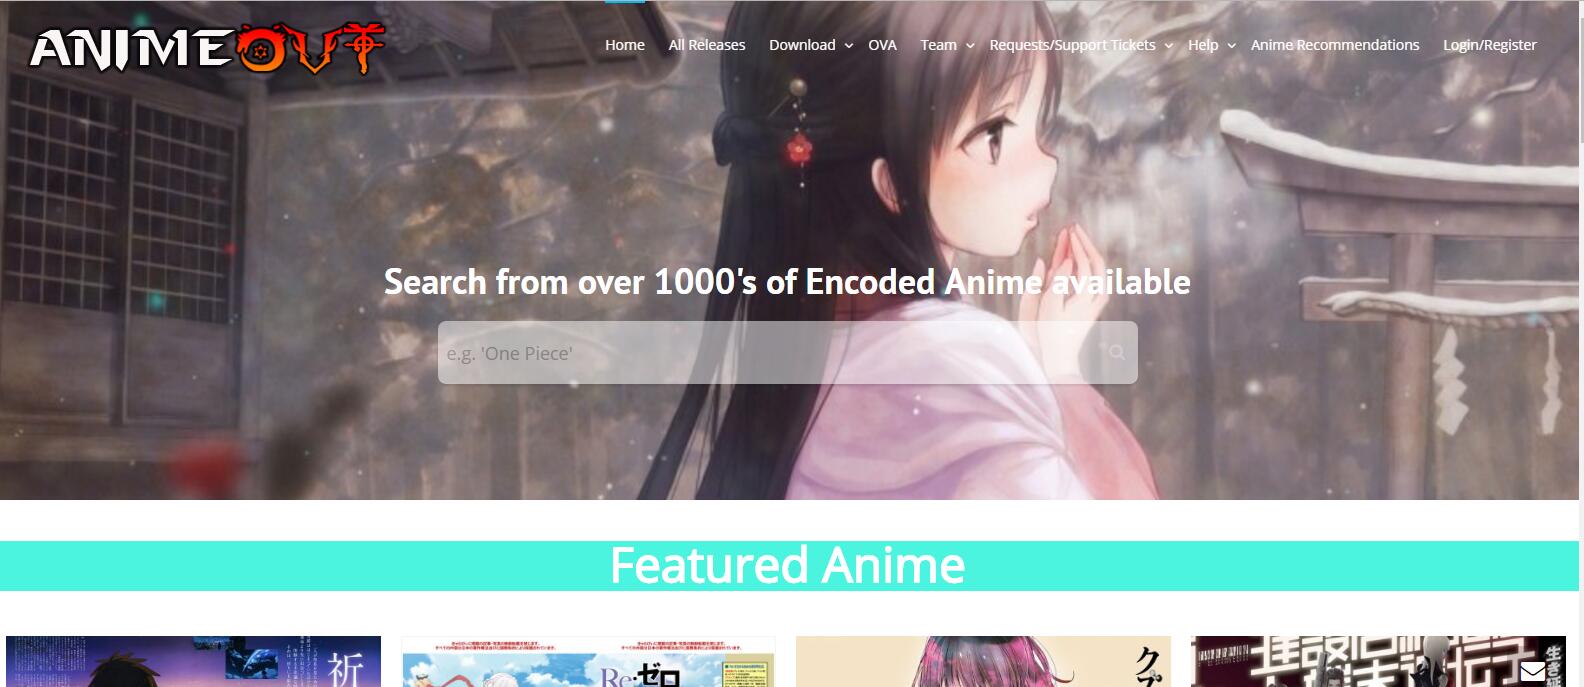 Where I Can Watch Anime Offline